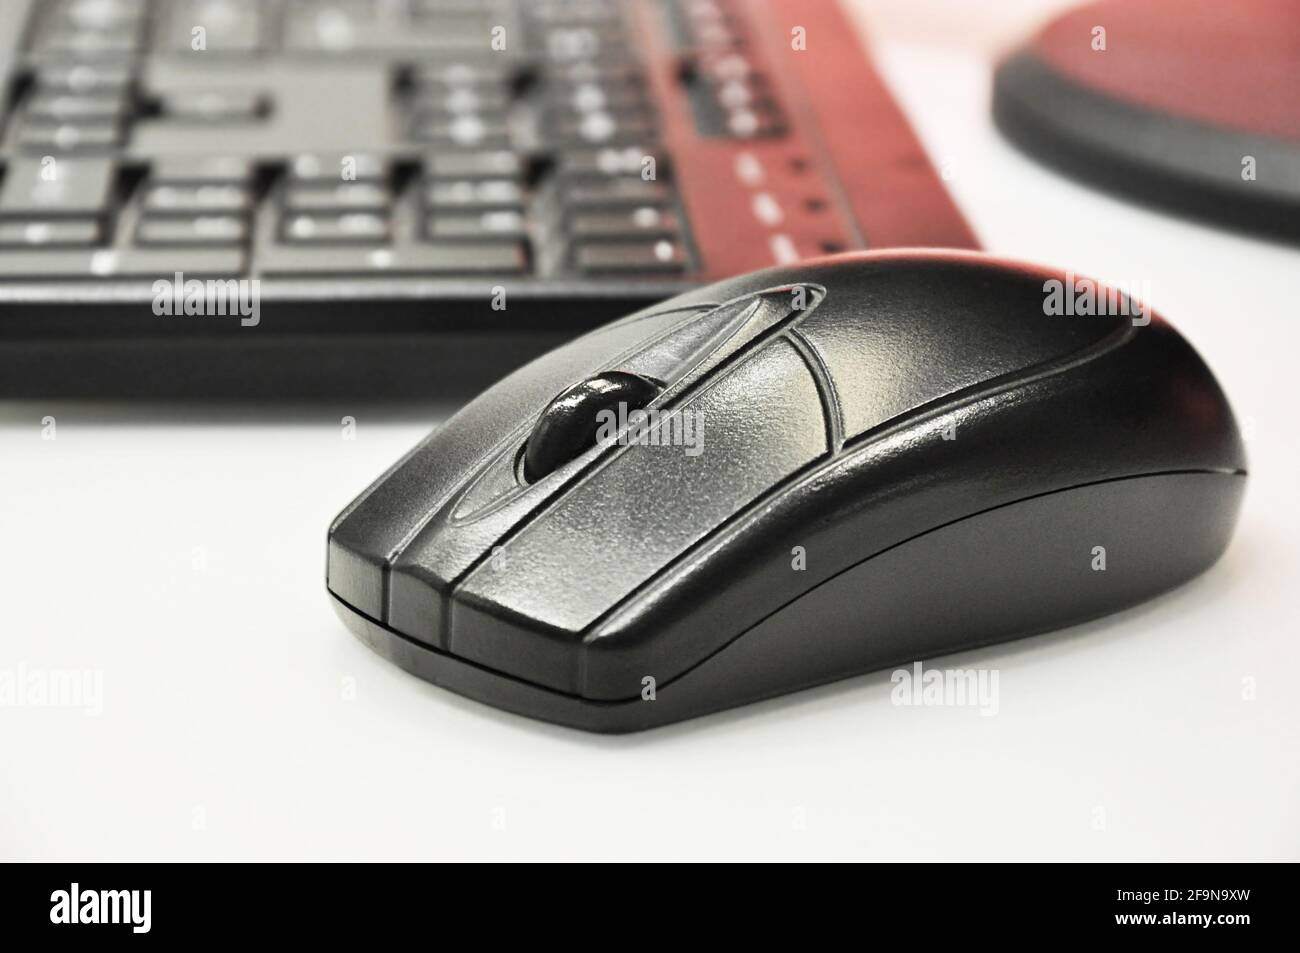 Black wireless mouse & computer keyboard on white desktop Stock Photo